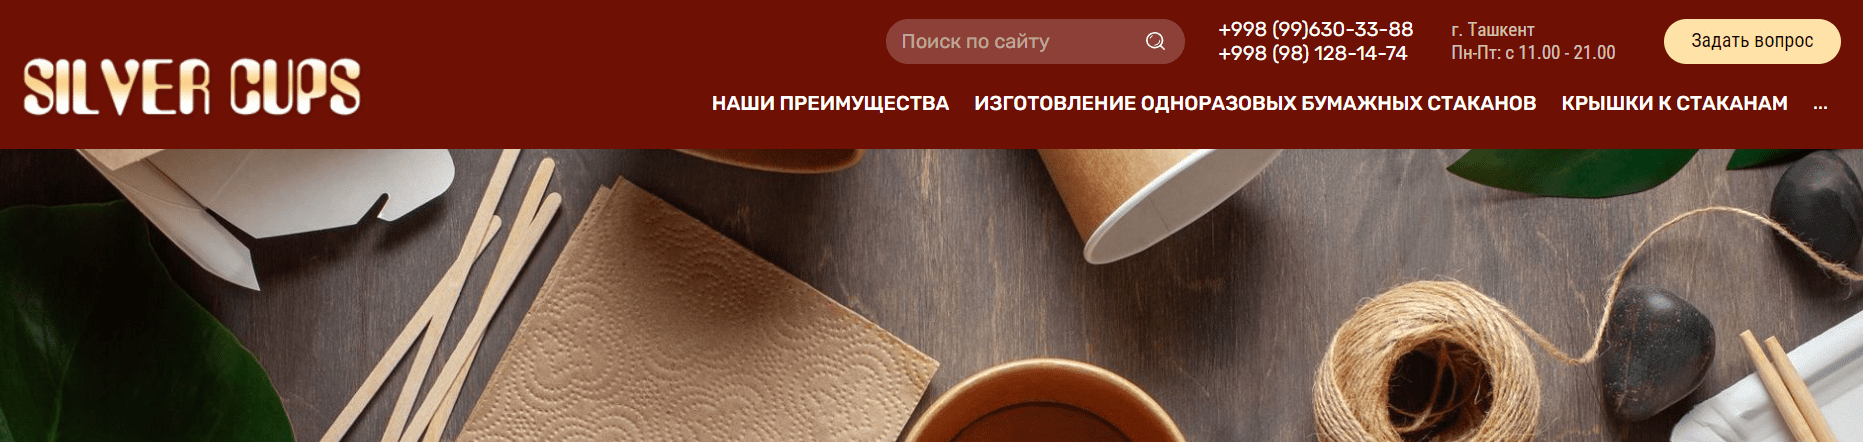 SILVER CUPS OOO SILVERCUPS (silvercups.uz) - официальный сайт